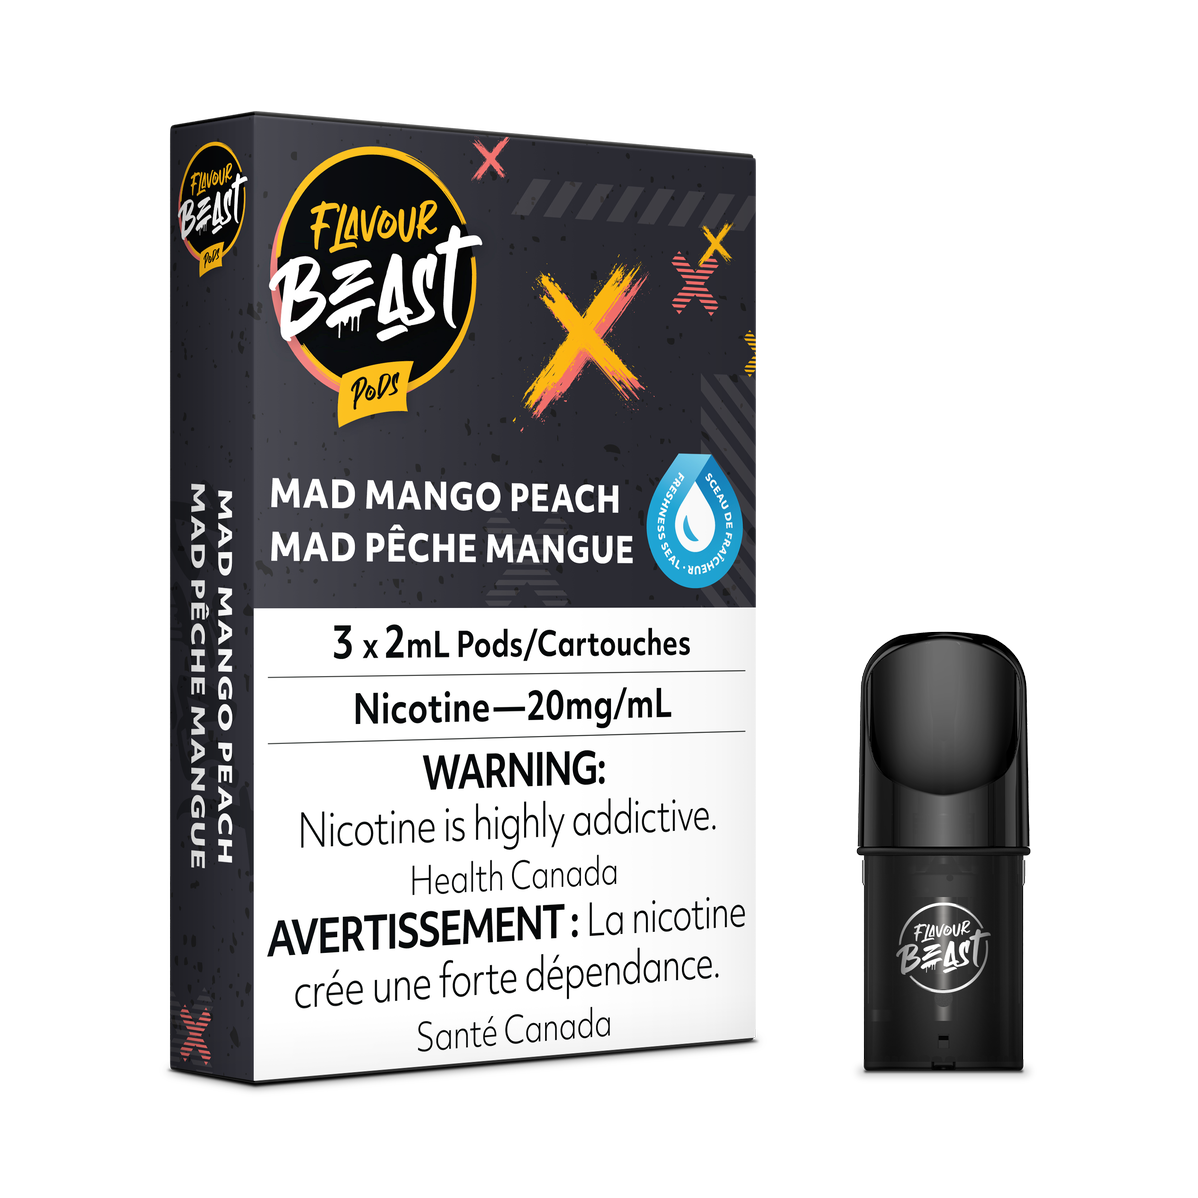 Flavour Beast - Mad Mango Peach Pods